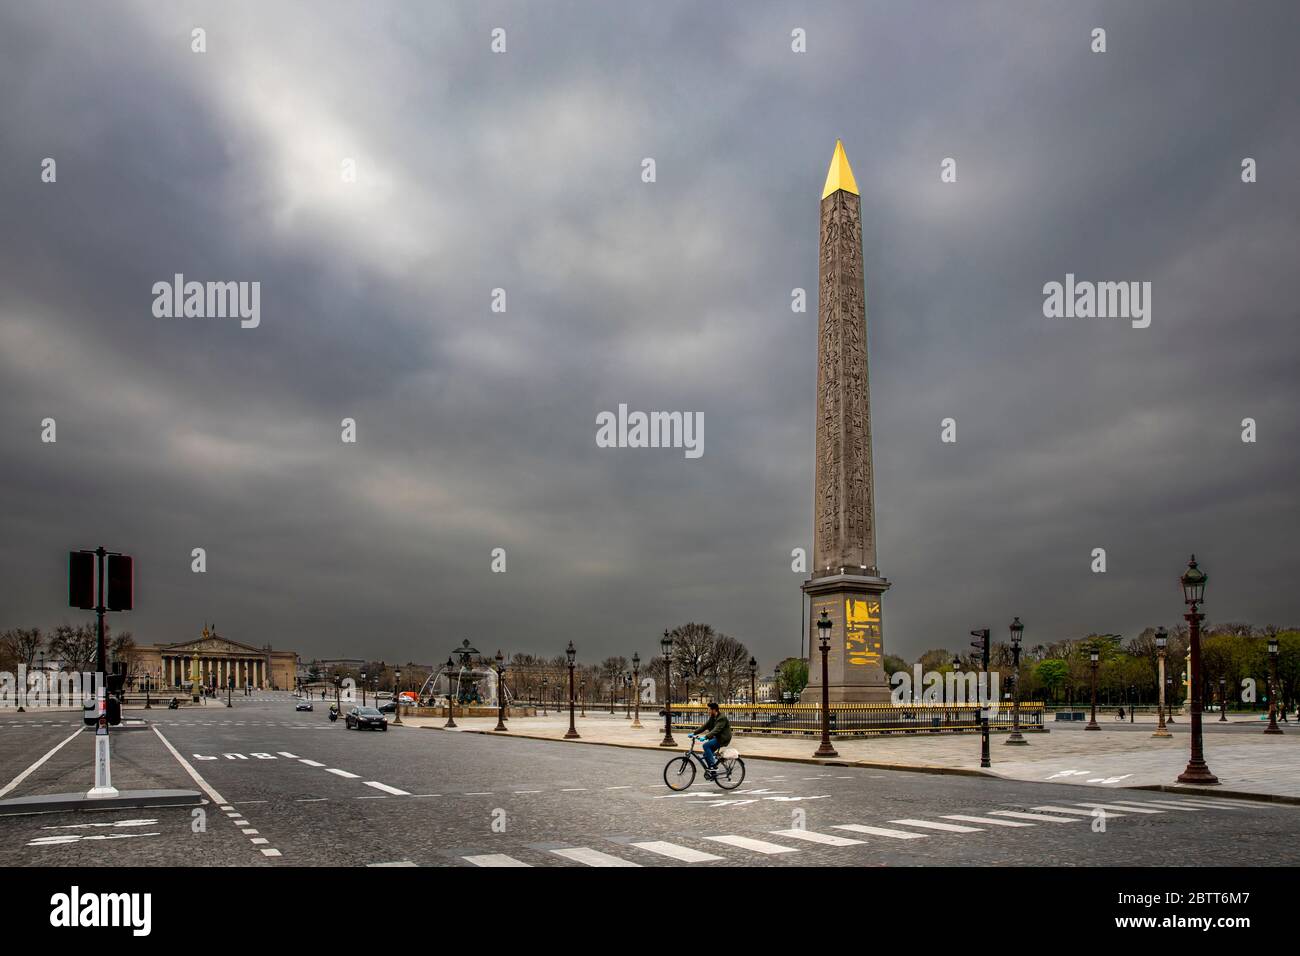 Paris, Frankreich - 17. März 2020: 1. Tag der Eindämmung wegen der Covid-19-Pandemie auf dem Place de la Concorde, nahe der Champs Elysees in Paris Stockfoto